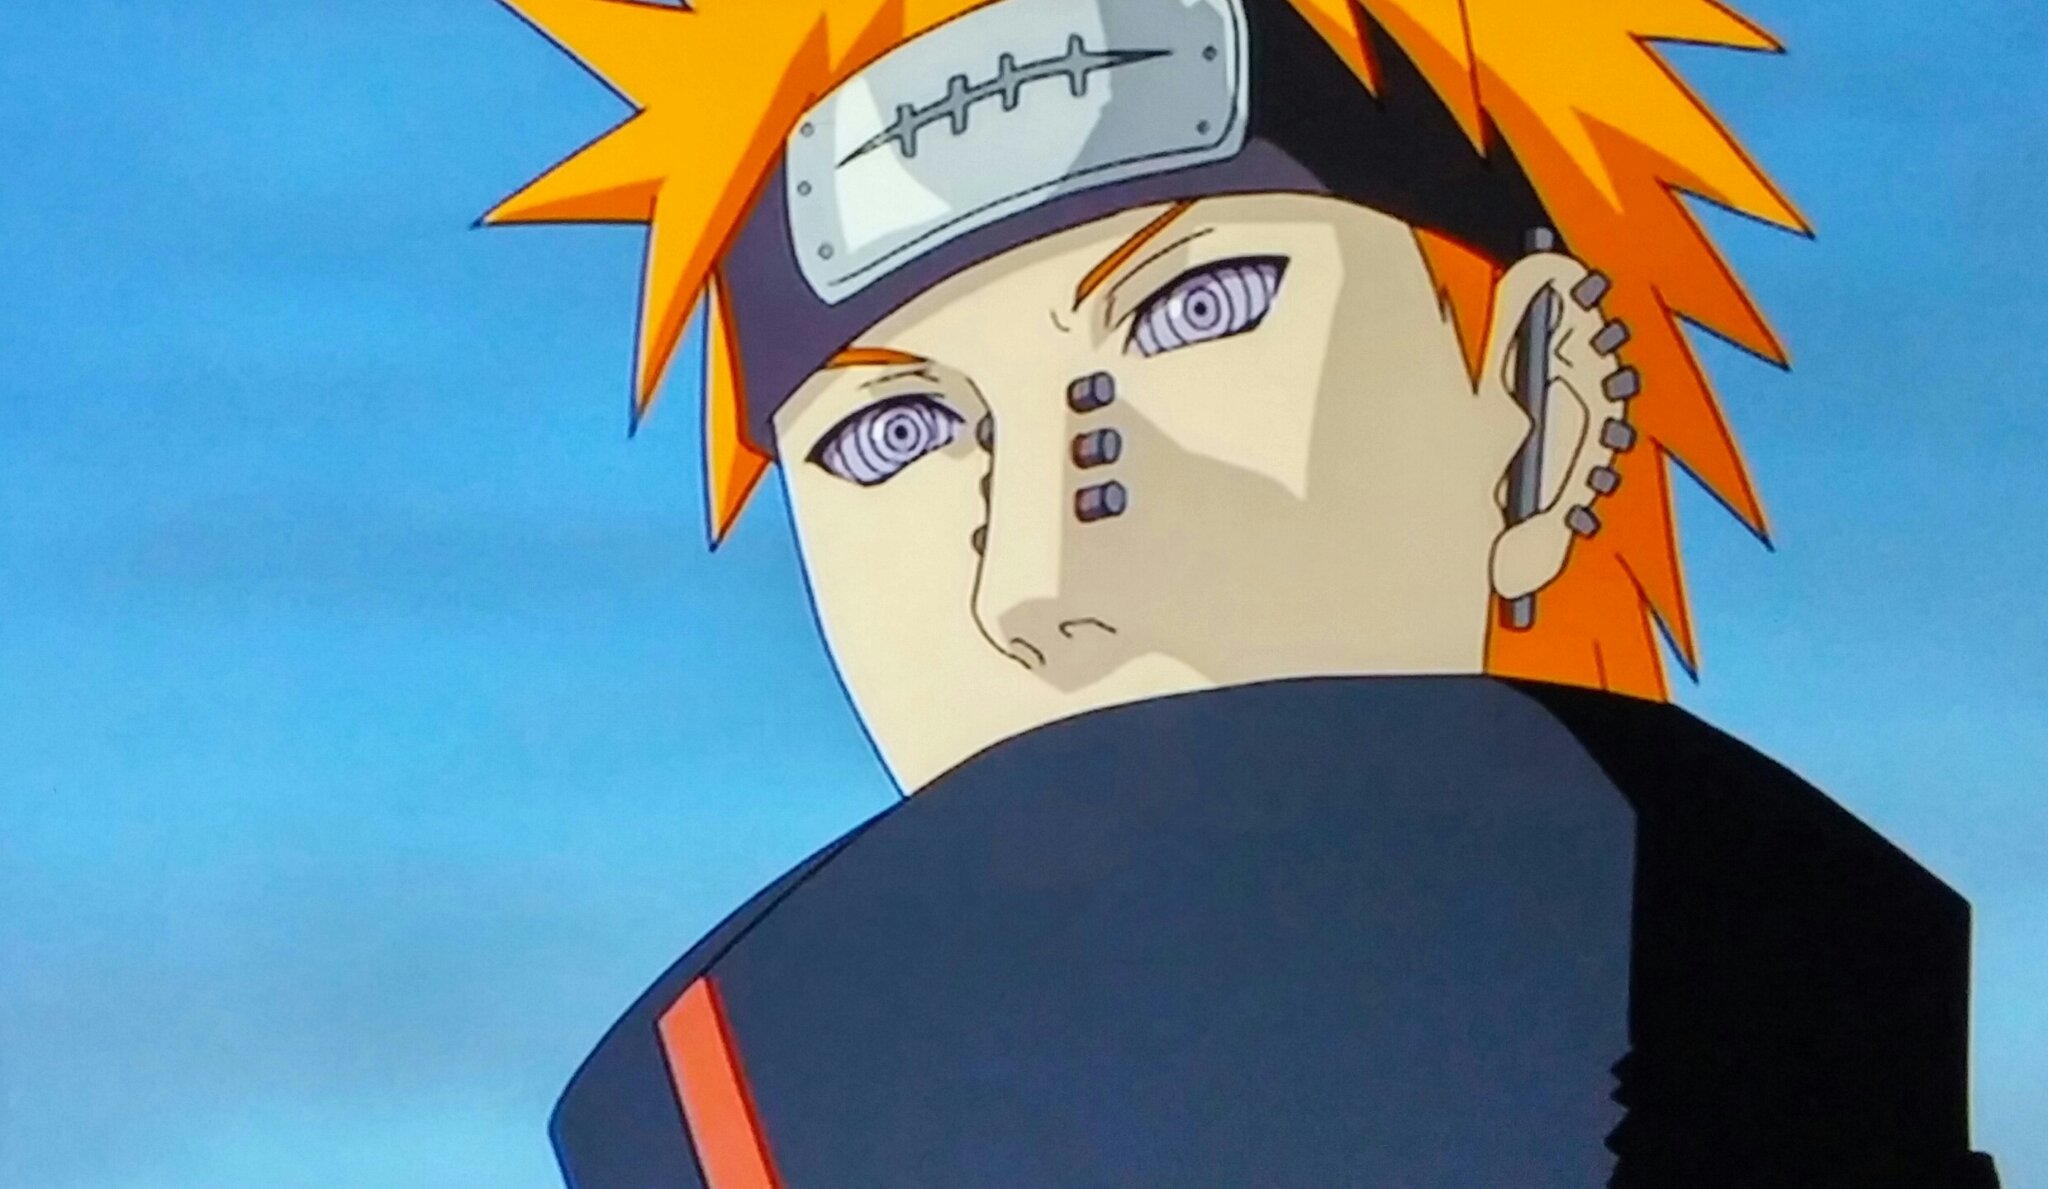 Satoru 3 Animations Naruto Shippuden Pain Episode 4 The Scenes Kakashi Gets Into A Desperate Situation ペイン六道 ペイン天道 やひこ ナルト疾風伝 Narutoshippuden T Co Evomqzfam9 Twitter